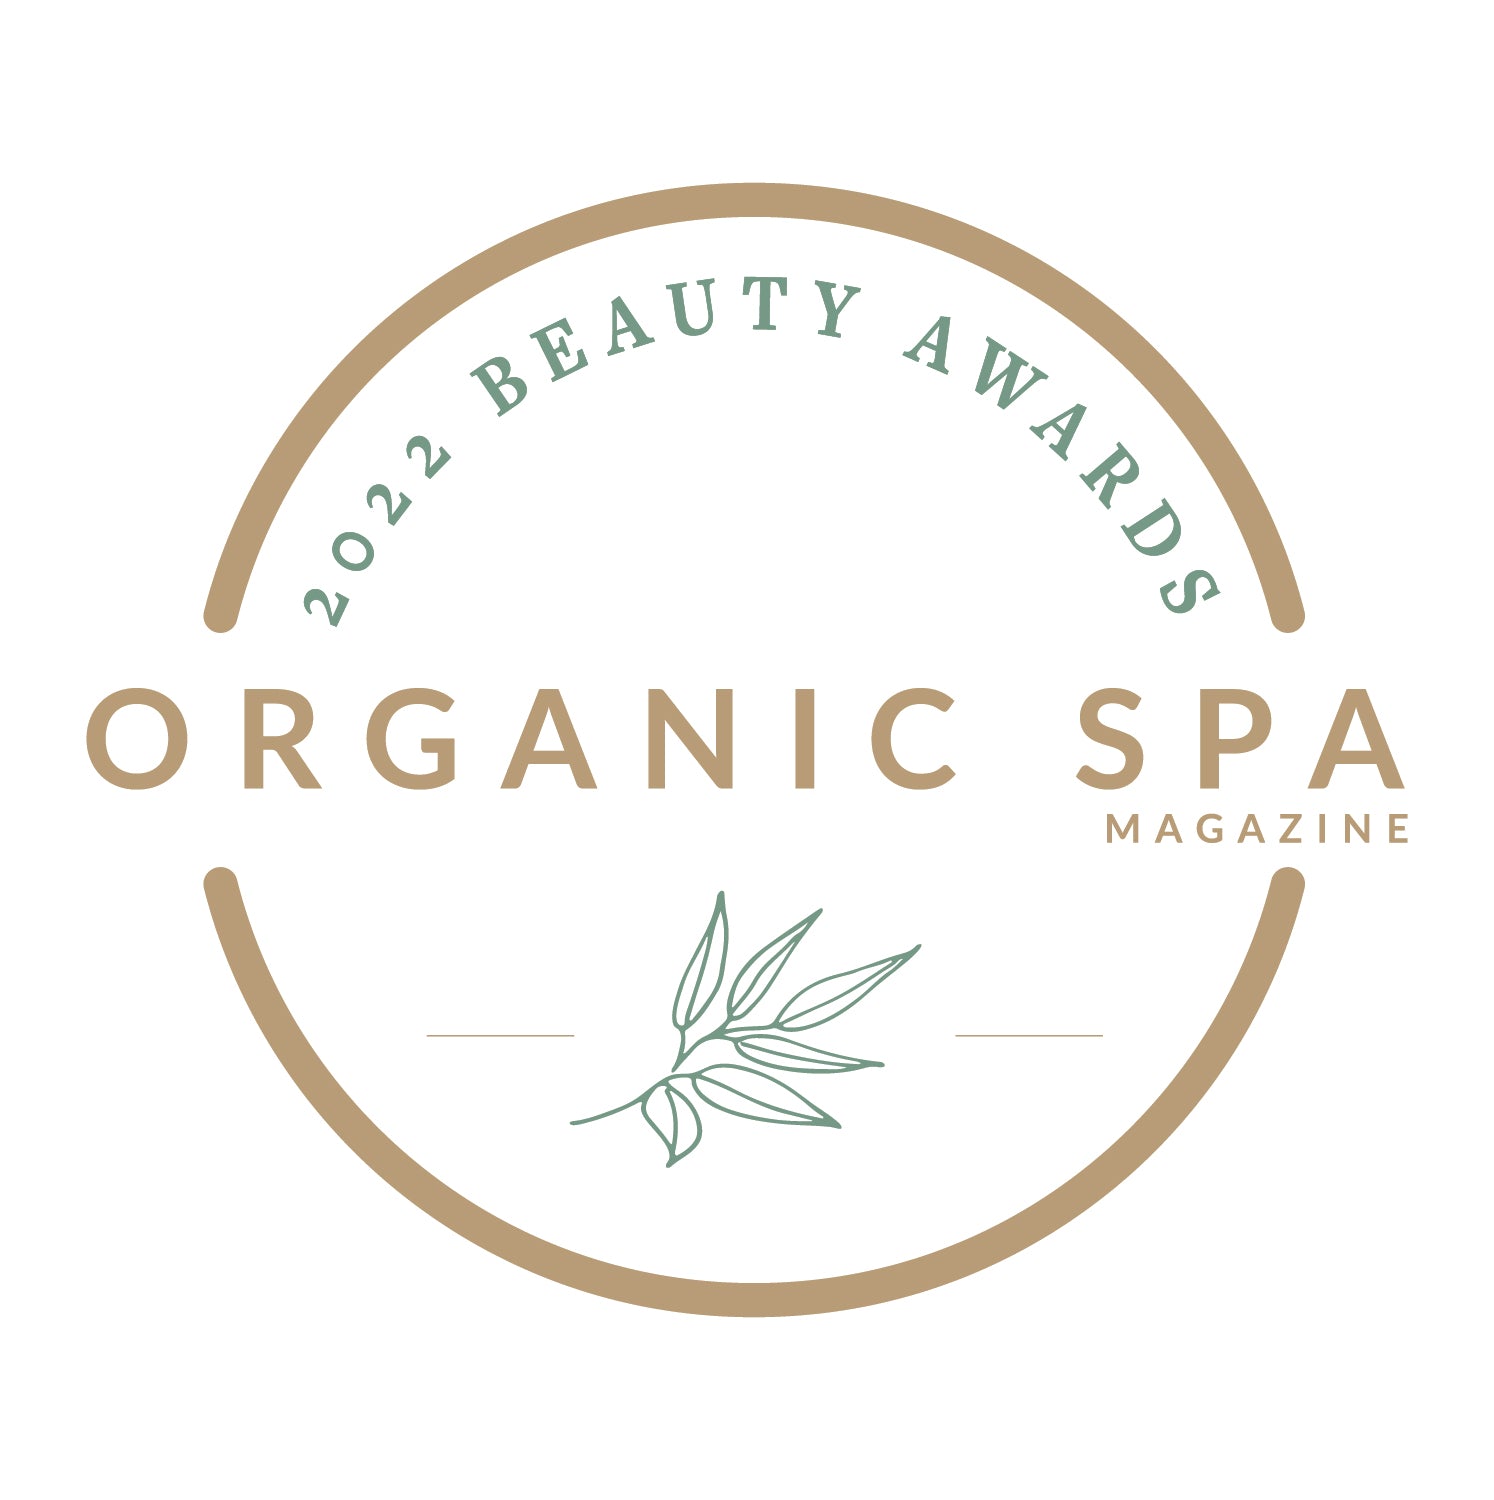 Vamigas is One of Organic Spa Media’s “Top Face Oils” Beauty Award Winners!